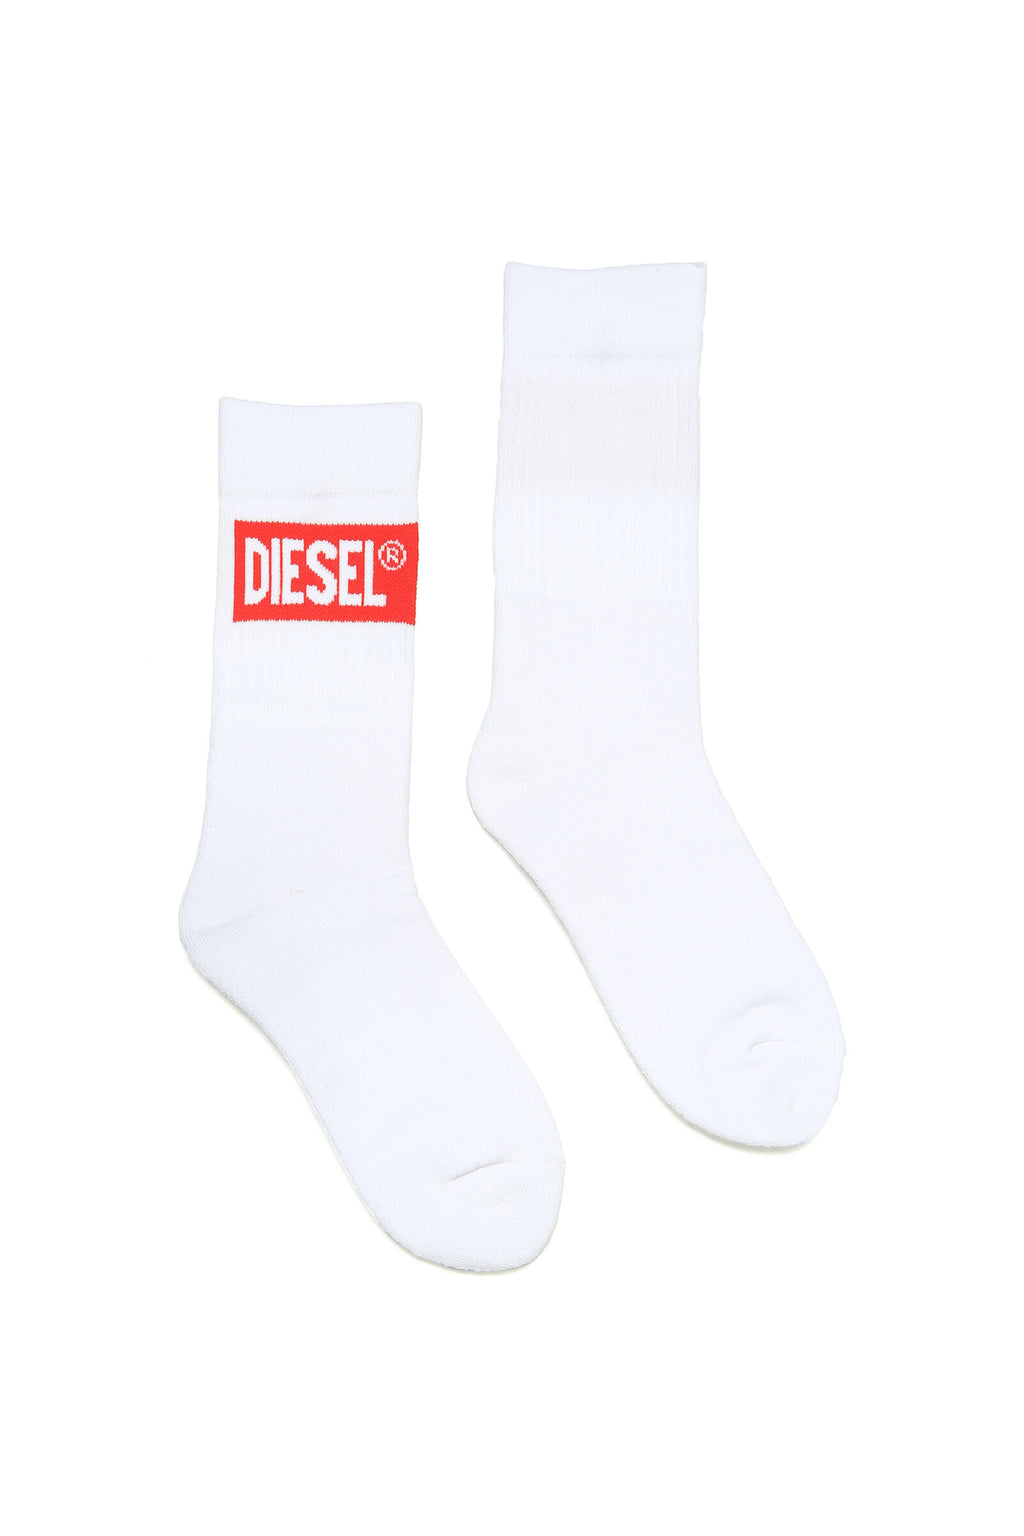 White socks with red Diesel logo